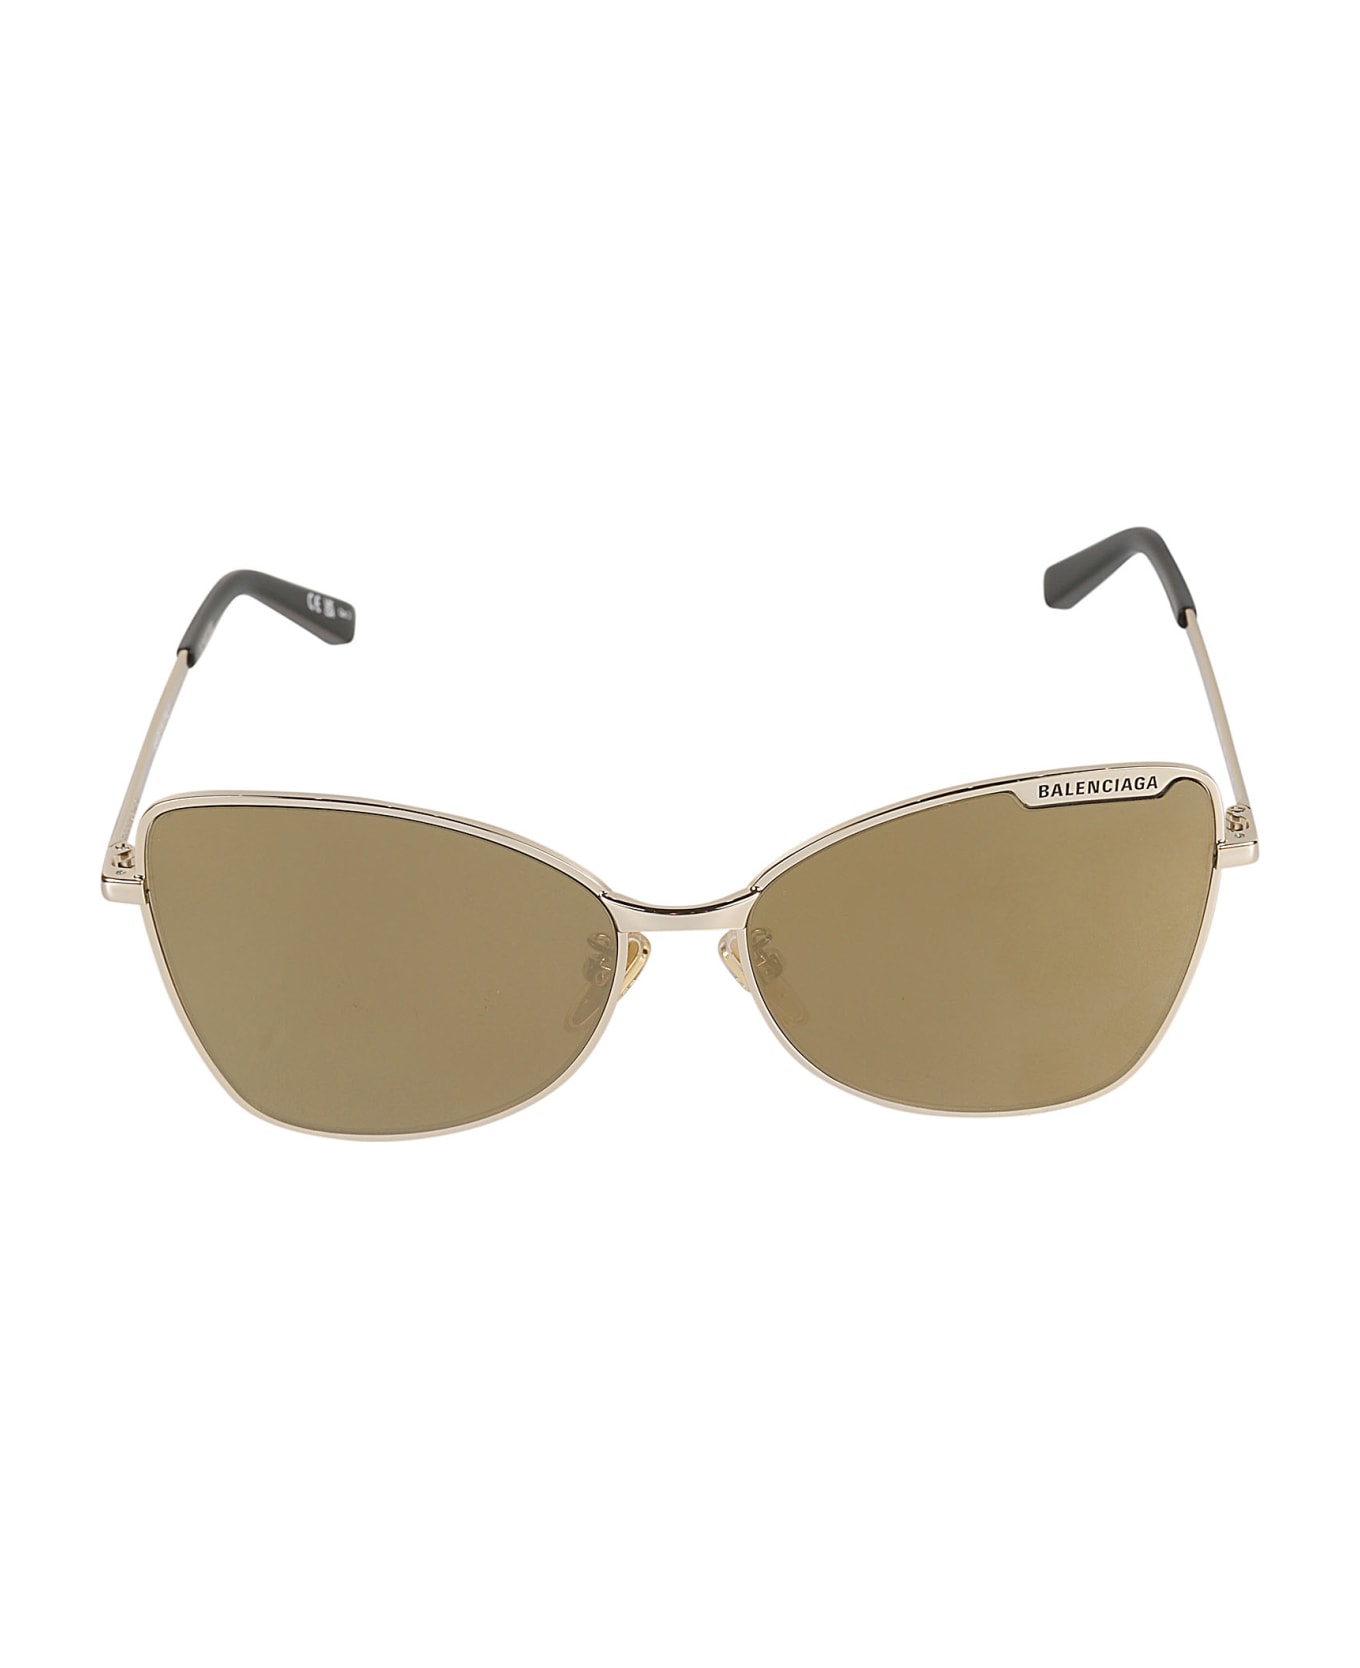 Balenciaga Eyewear Butterfly Frame Sunglasses - Gold/Bronze サングラス